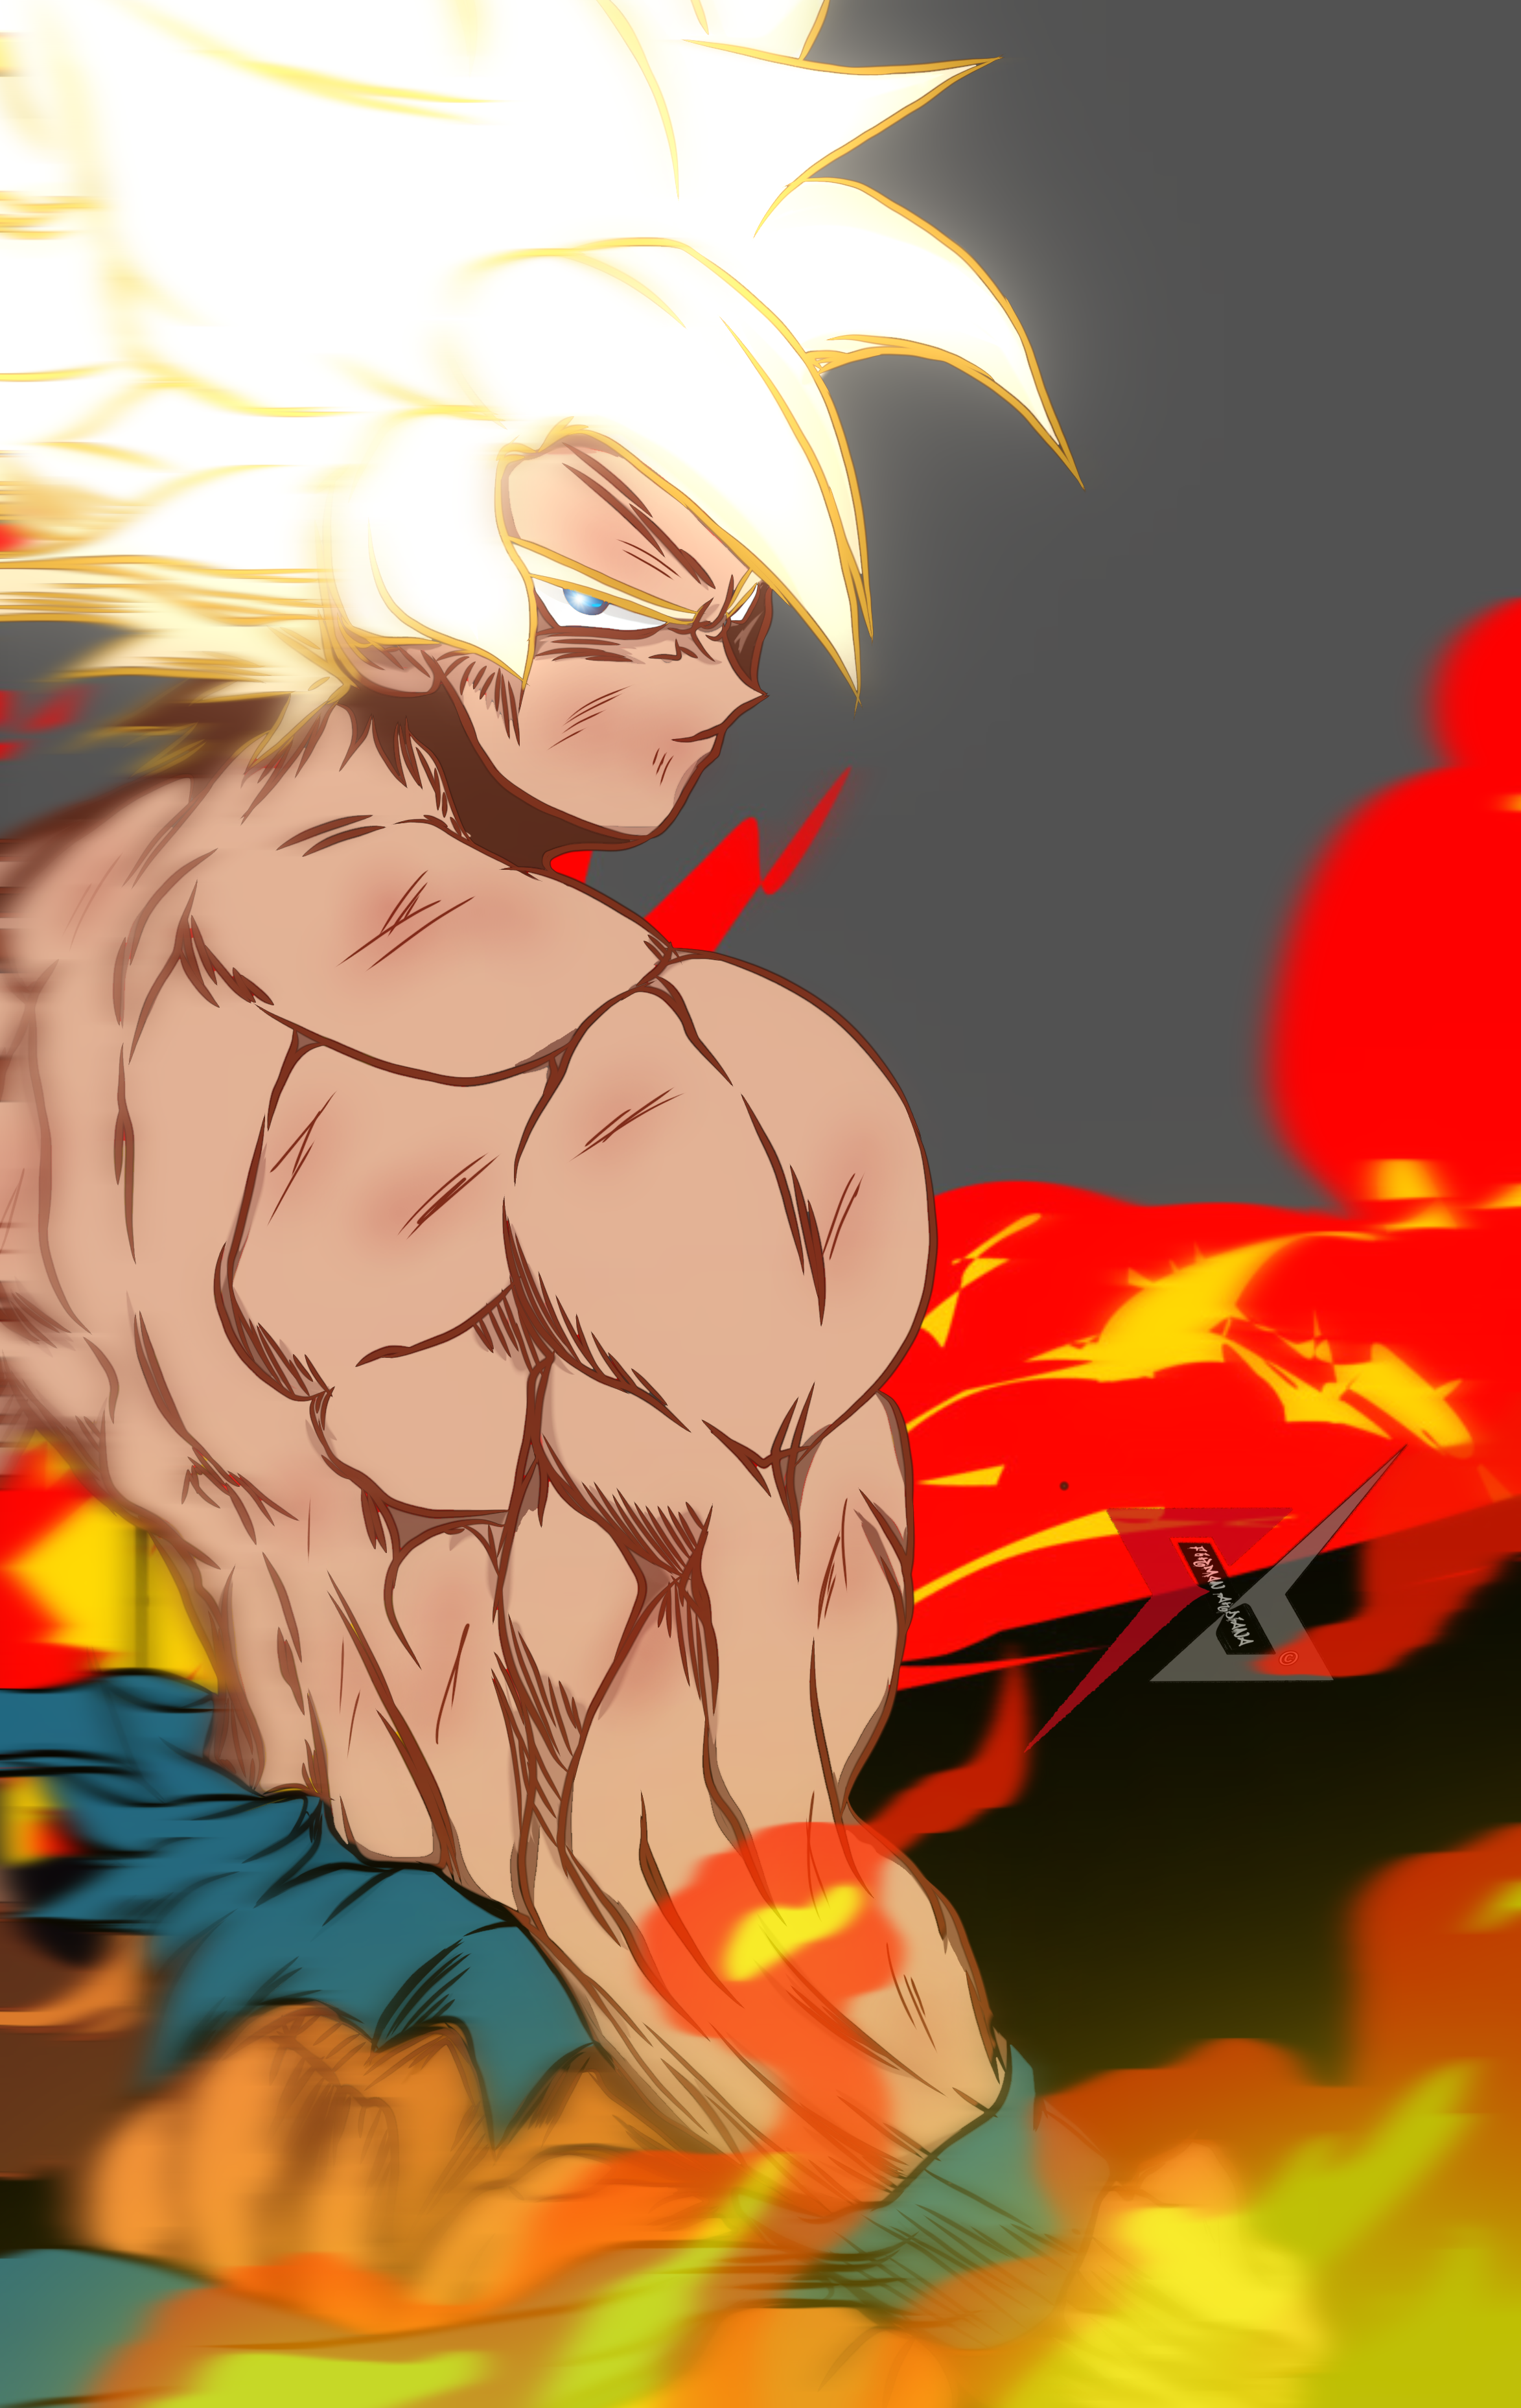 Super Sayajin Son Goku Wallpaper Dragonball Z by Sennexx on DeviantArt